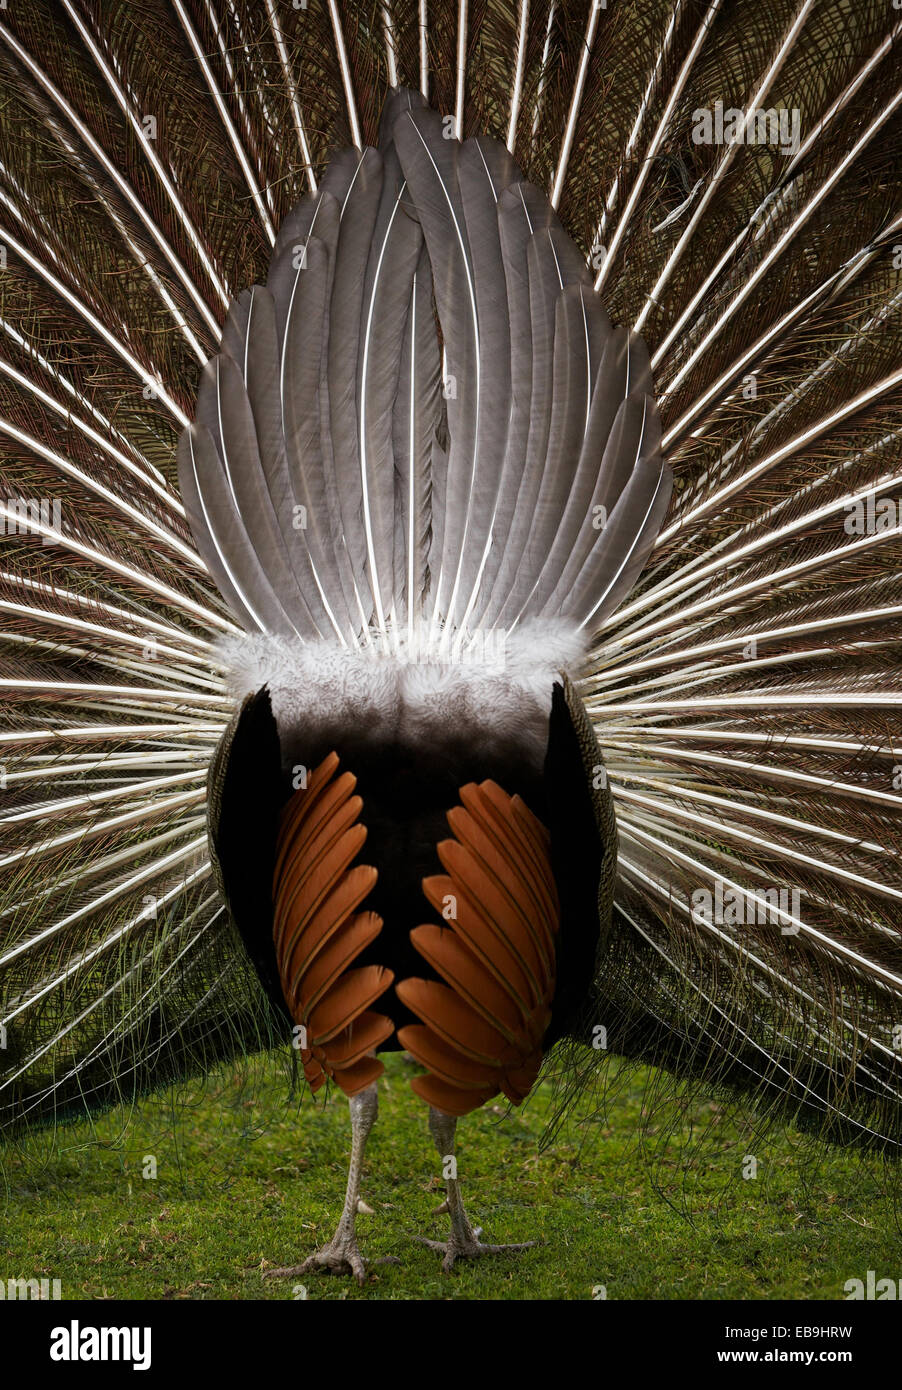 Parte posterior de Peacock Foto de stock